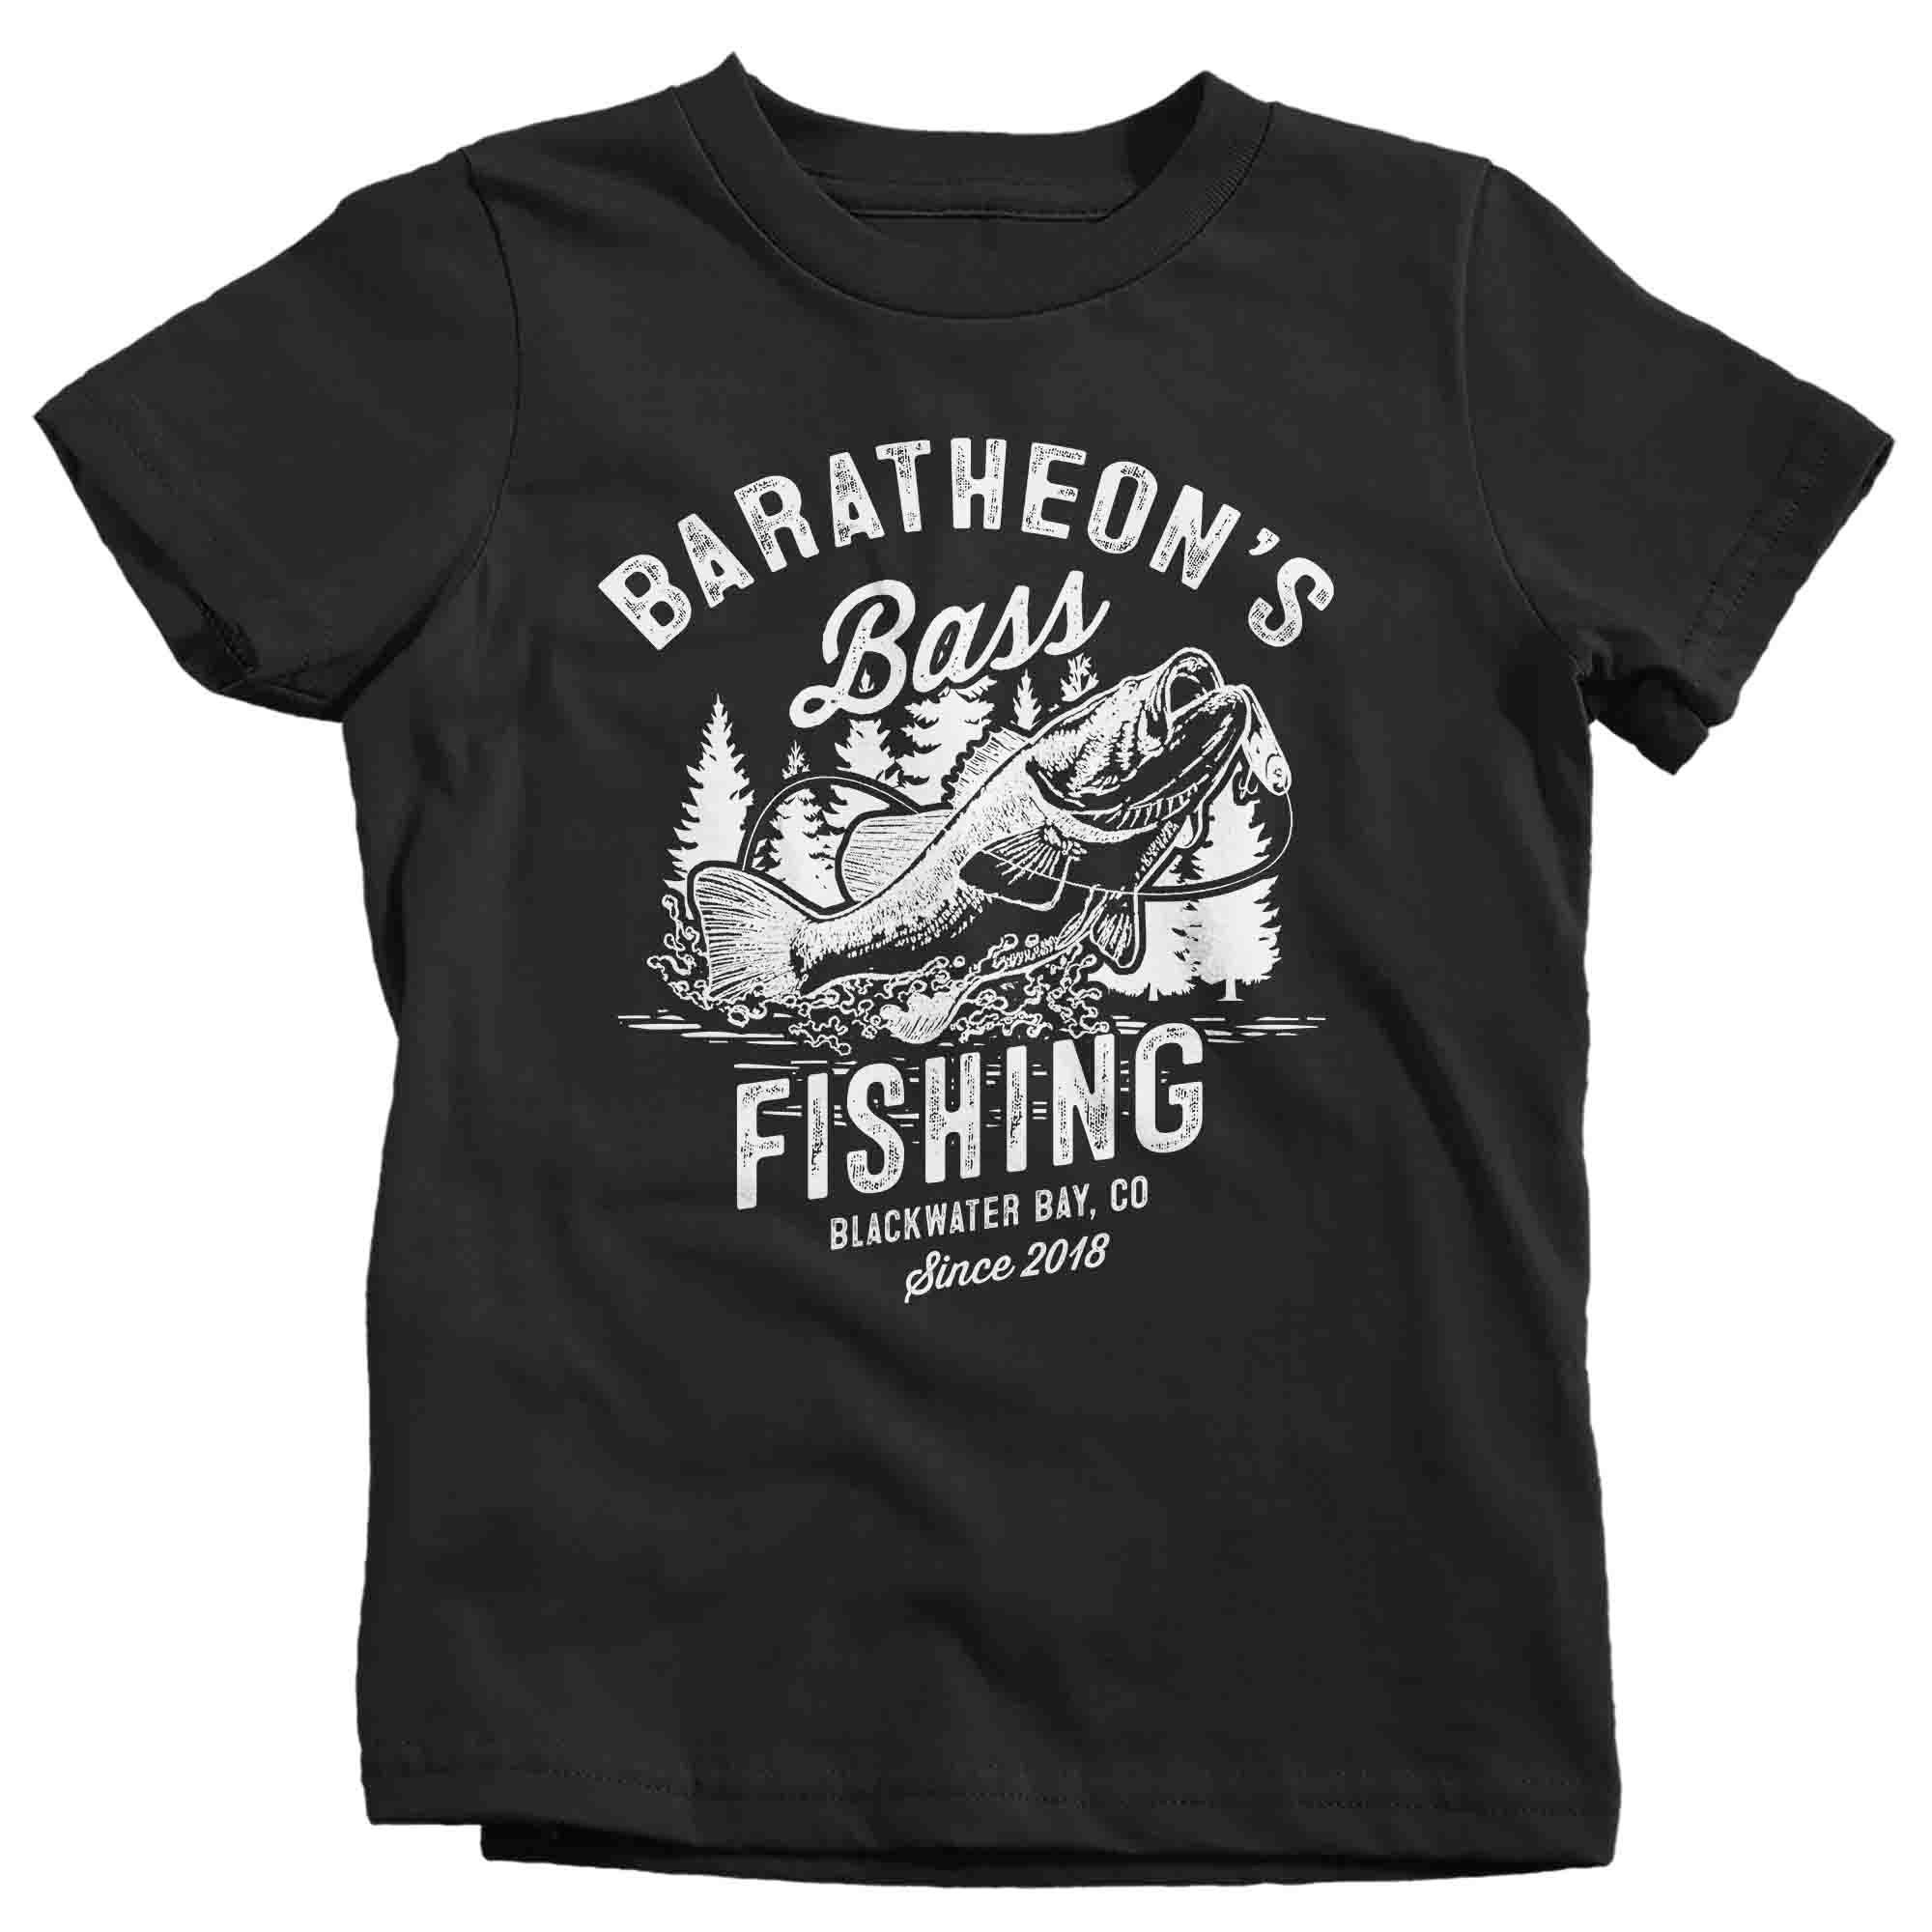 Kids Fishing T-shirt Fisherman Bass Fishing Tee Shirt Custom Personalized  Tournament Fish Trip Vacation Gift Unisex Boy's Girl's 